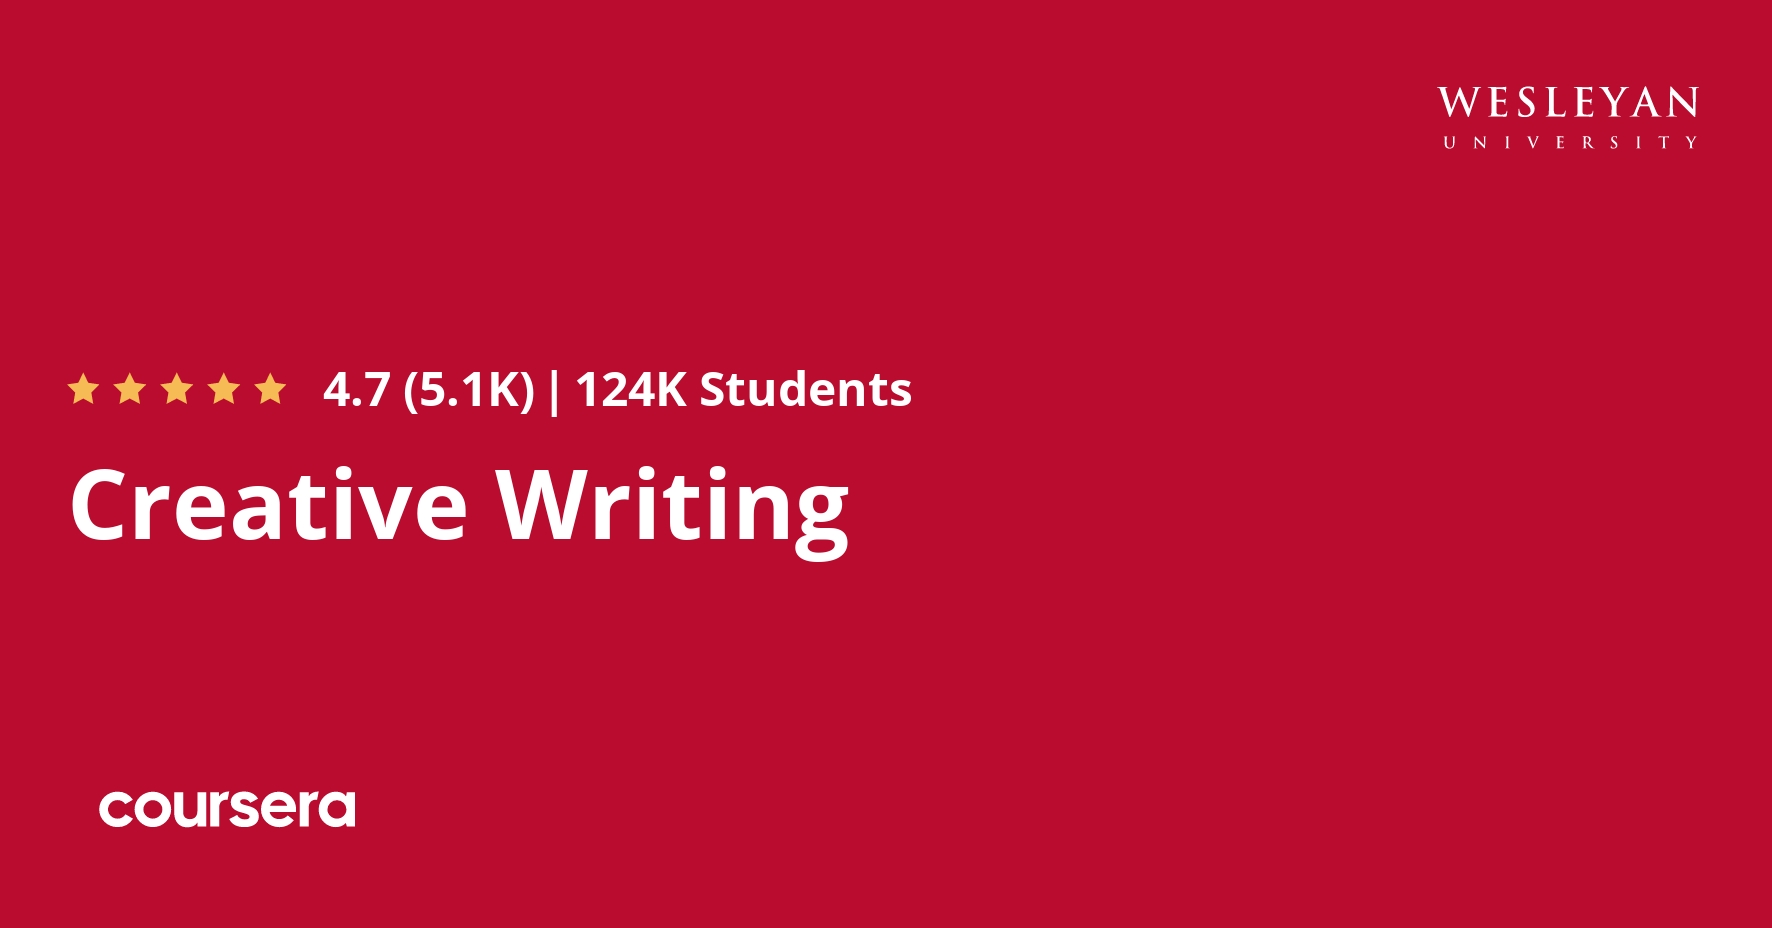 Creative Writing Specialization by Wesleyan University